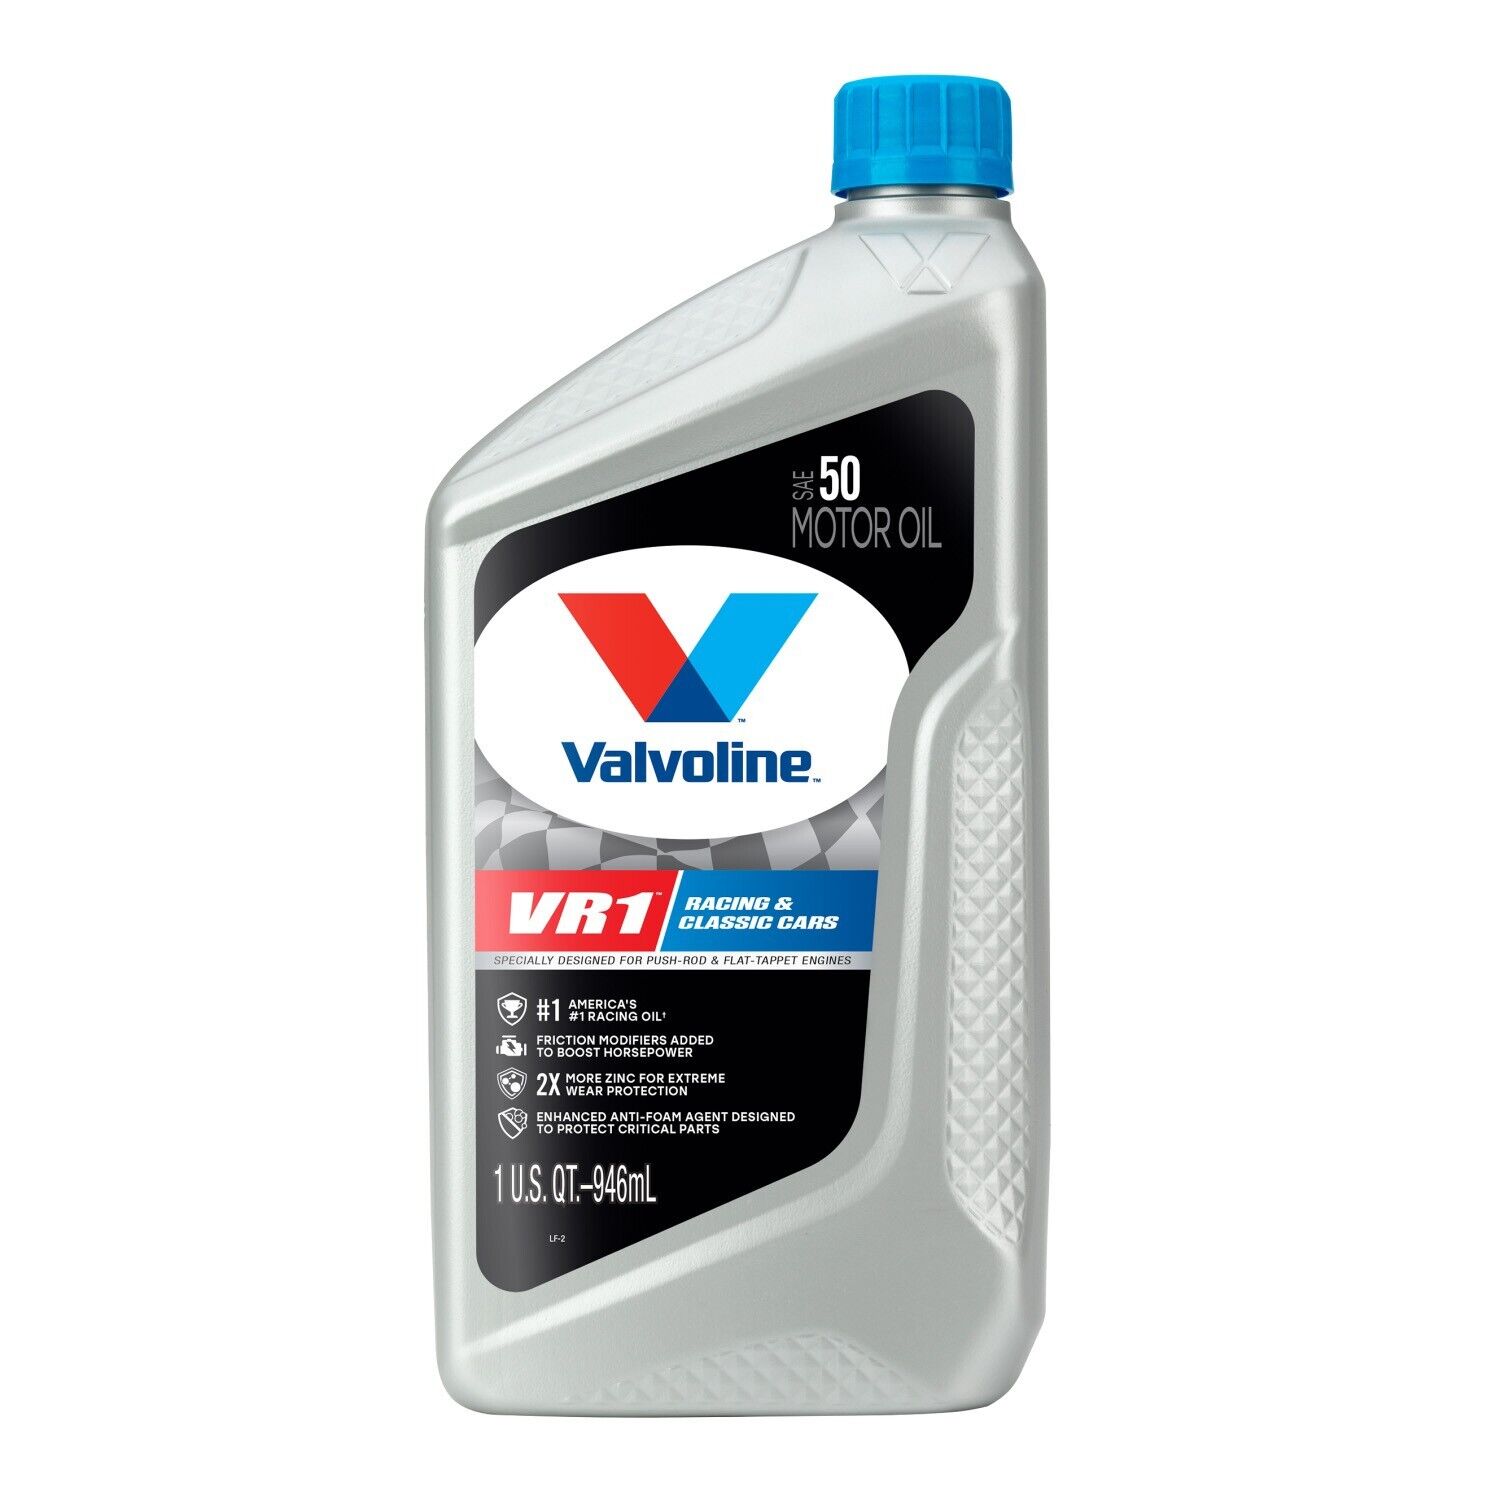 Valvoline Vr1 Racing 50 Conventional Motor Oil 1 Qt